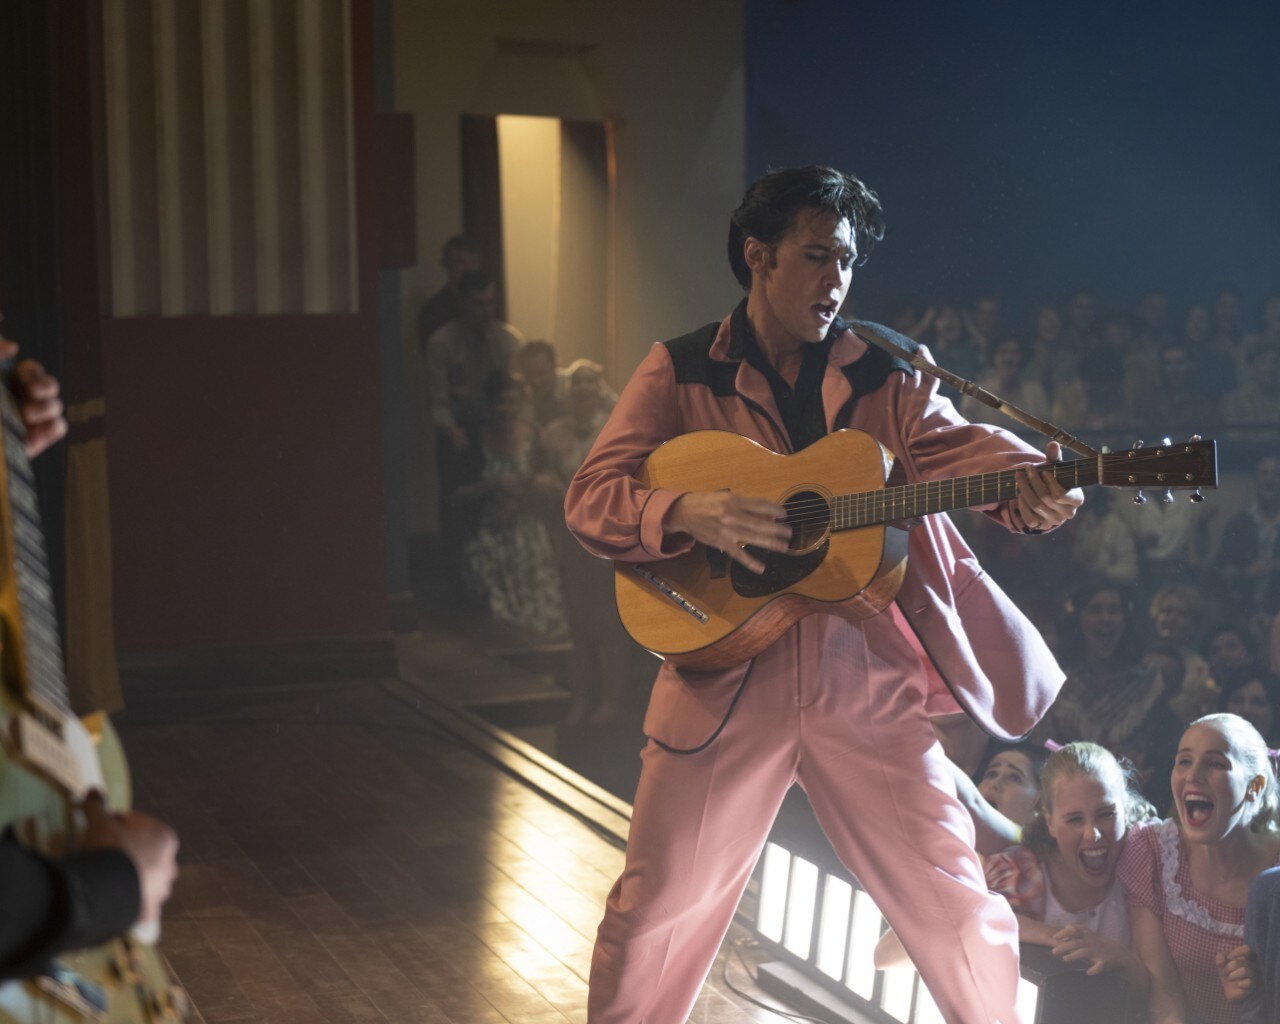 actor playing Elvis Presley dancing in a pink suit